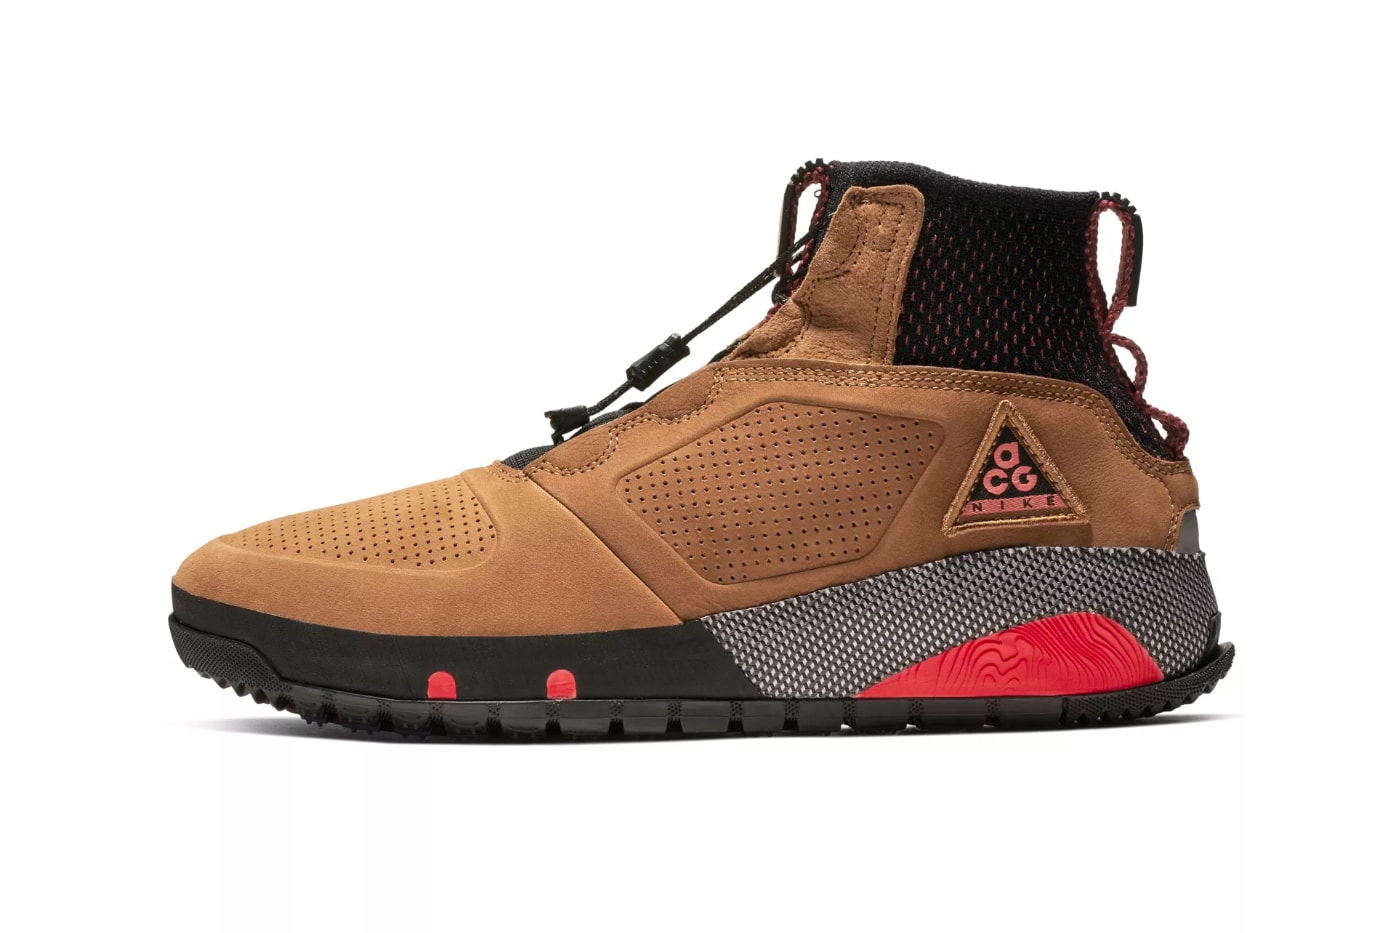 Nike ACG Ruckel Ridge "British Tan" Release Date info price boot tan colorway habanero red sneaker 